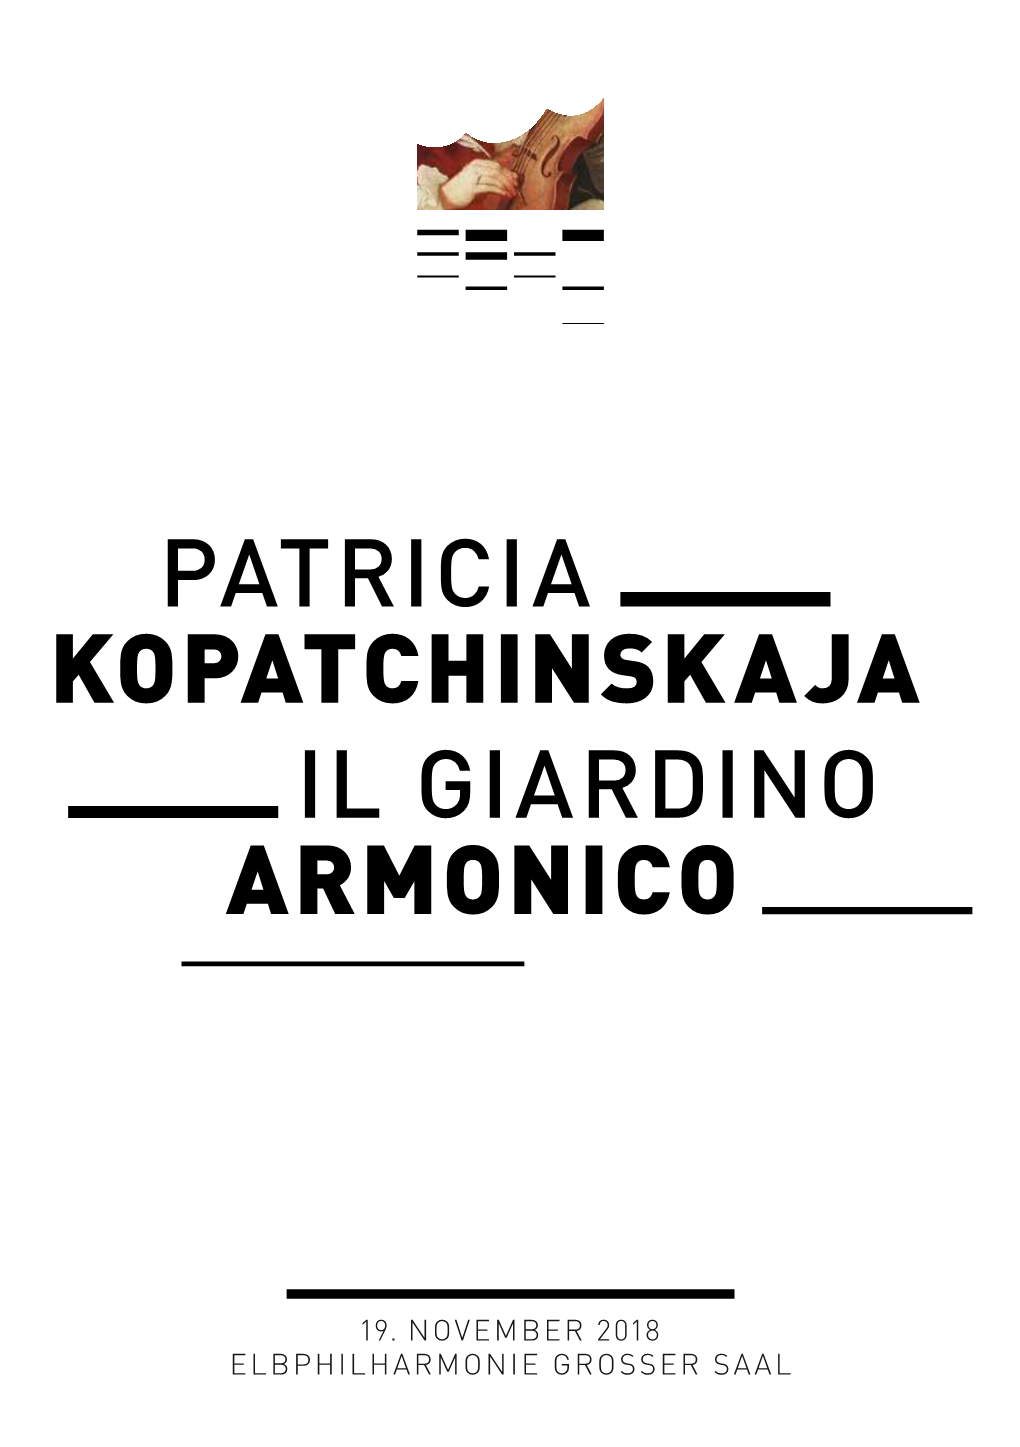 Kopatchinskaja Armonico